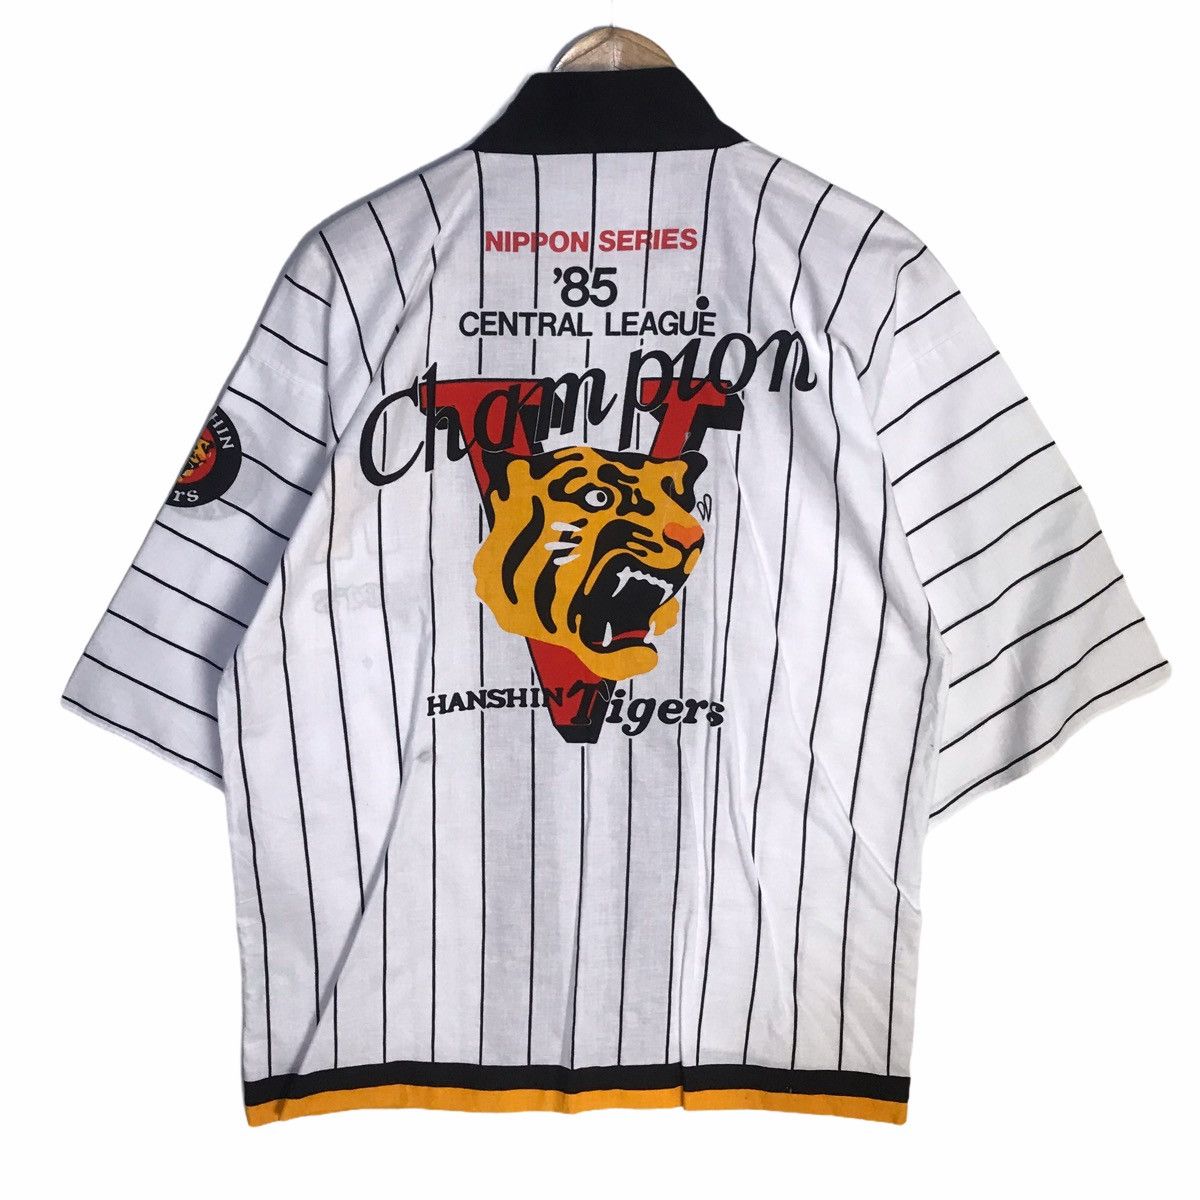 Japanese Brand - Vintage ‘85 hanshin tigers central league champion kimono - 1